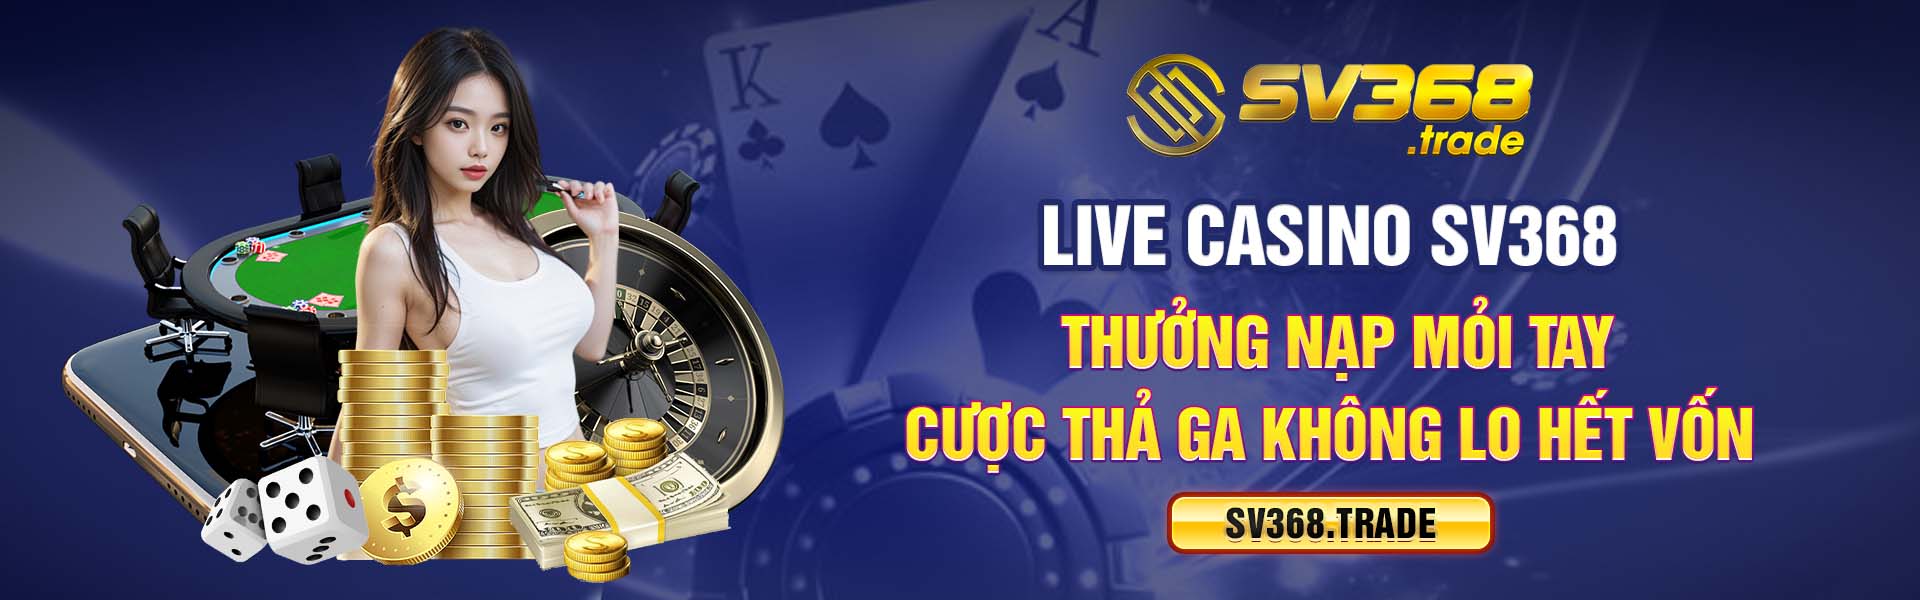 live-casino-sv368-thuong-nap-moi-tay--cuoc-tha-ga-khong-lo-het-von